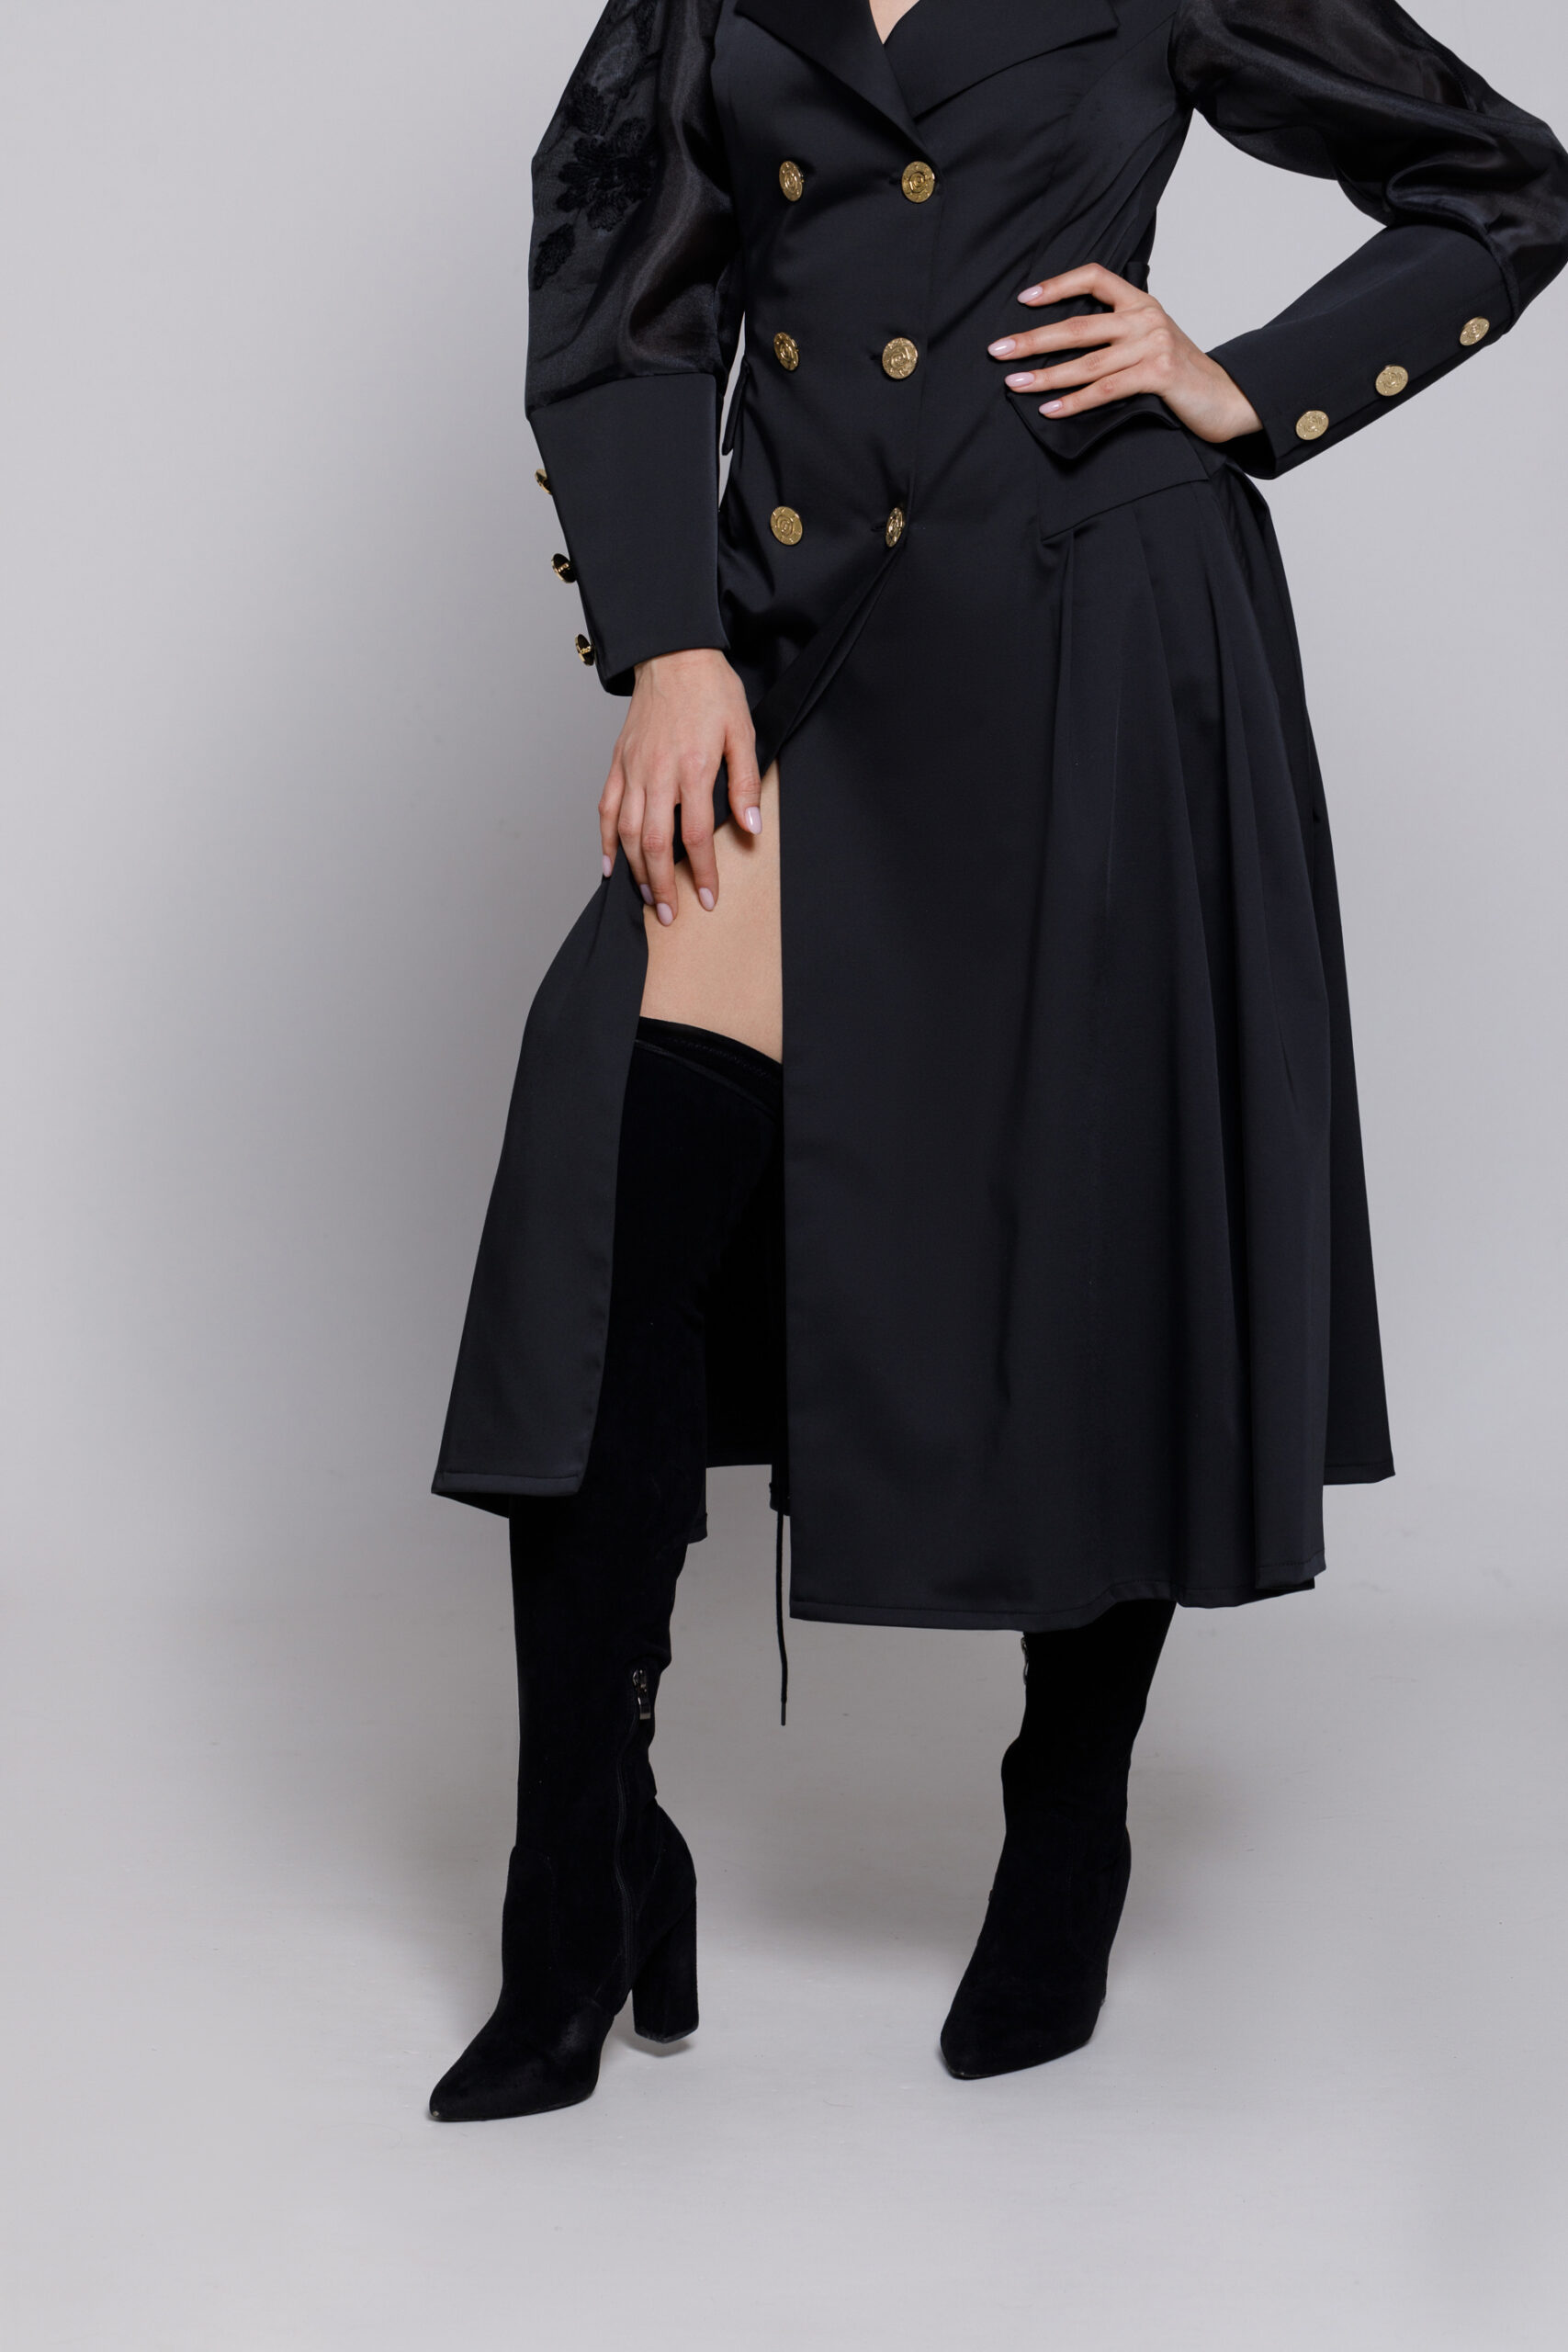 Dress/Overcoat MILENA made of tercot with organza sleeves. Natural fabrics, original design, handmade embroidery